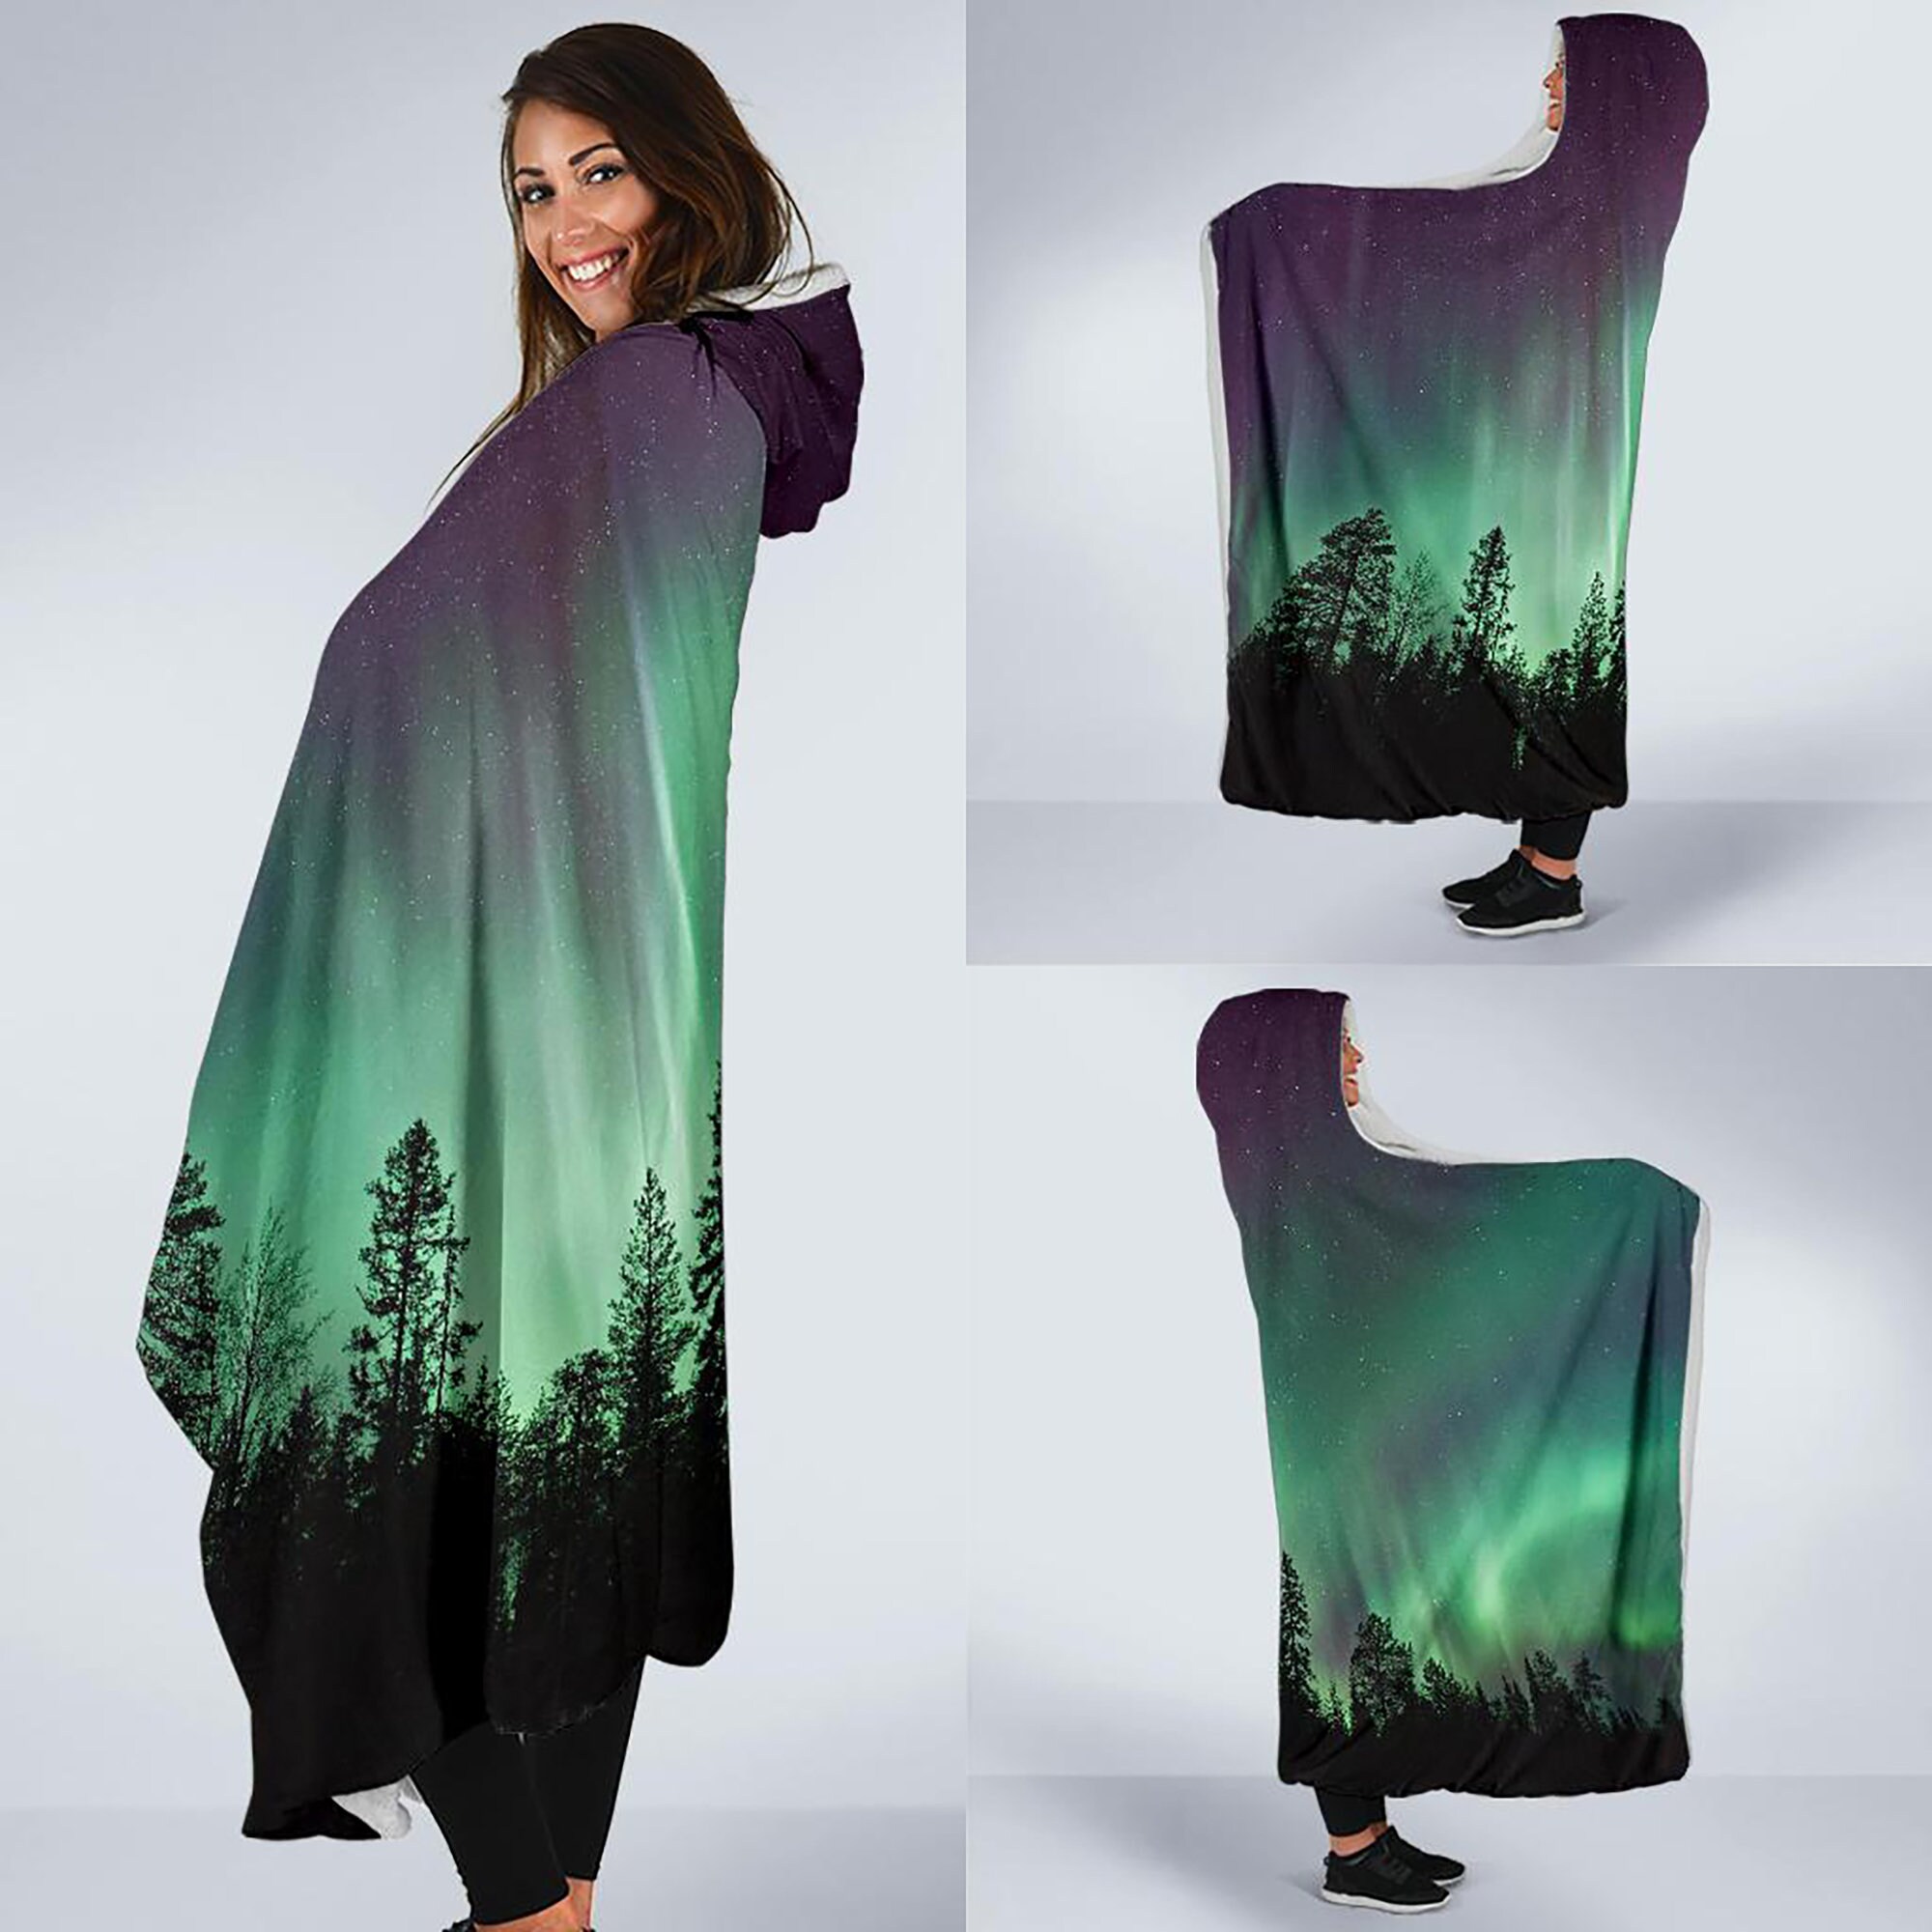 Aurora Borealis Hooded Blanket